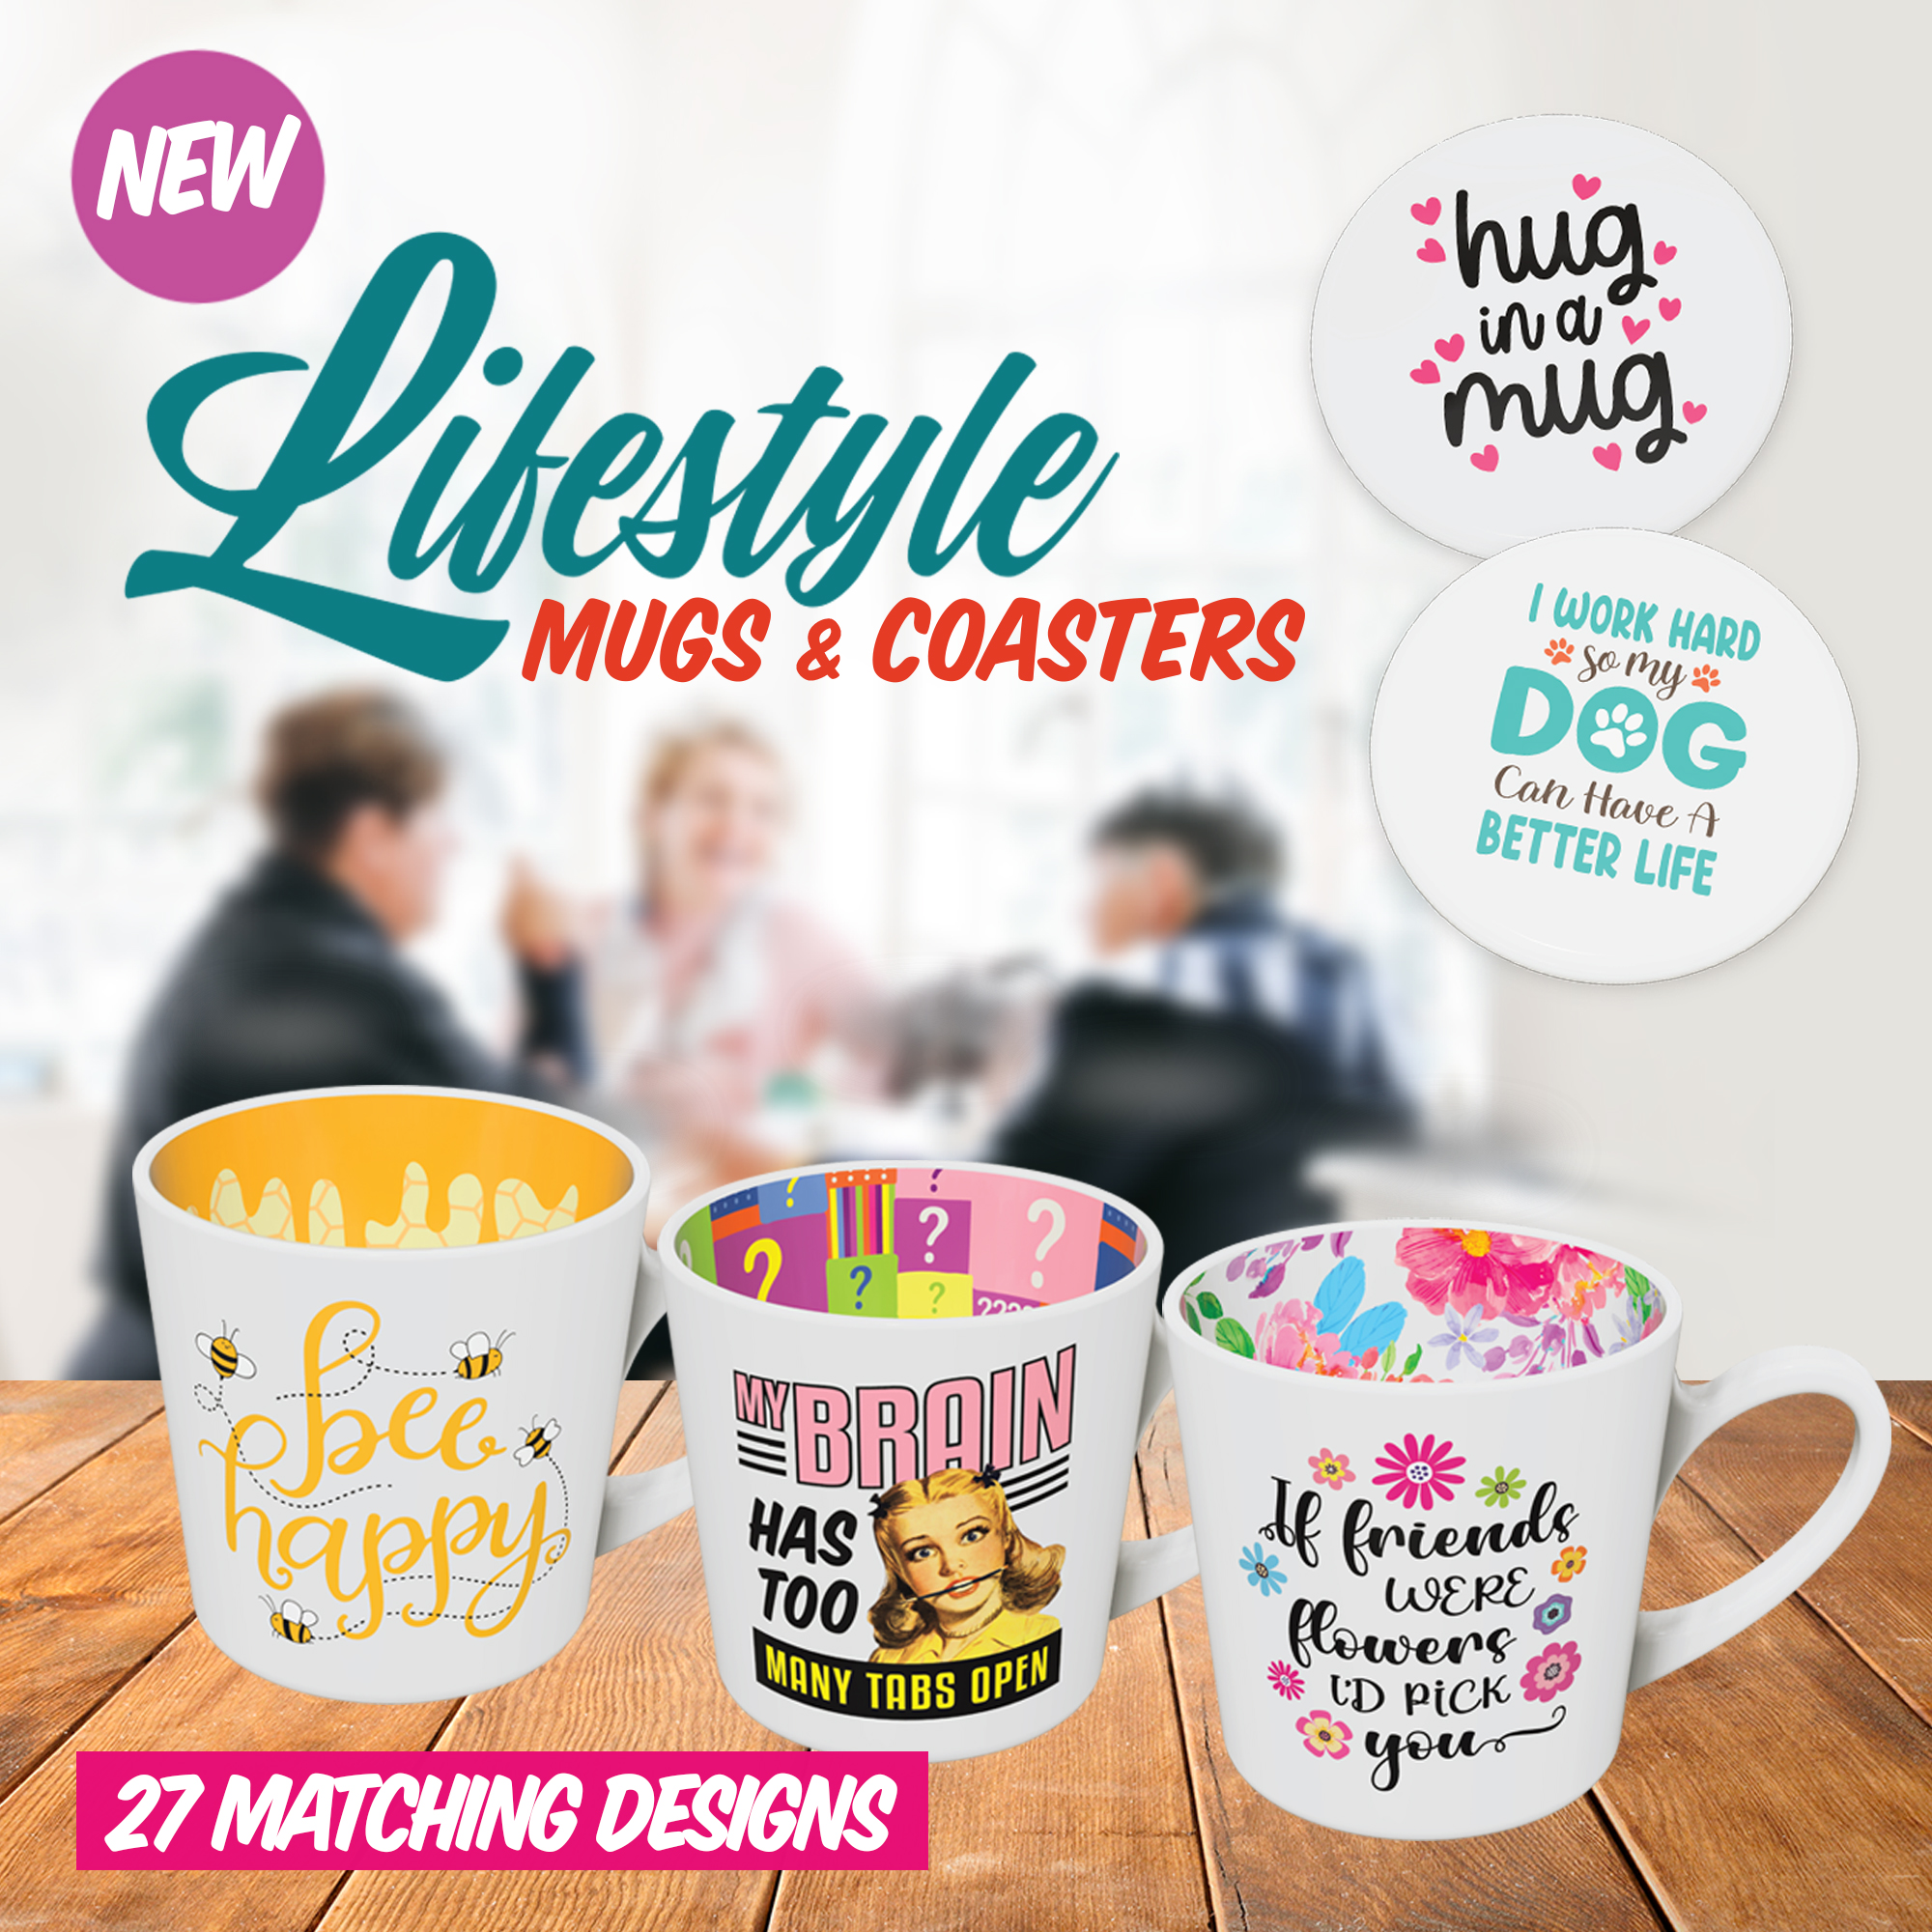 Lifestyle mugs and coasters